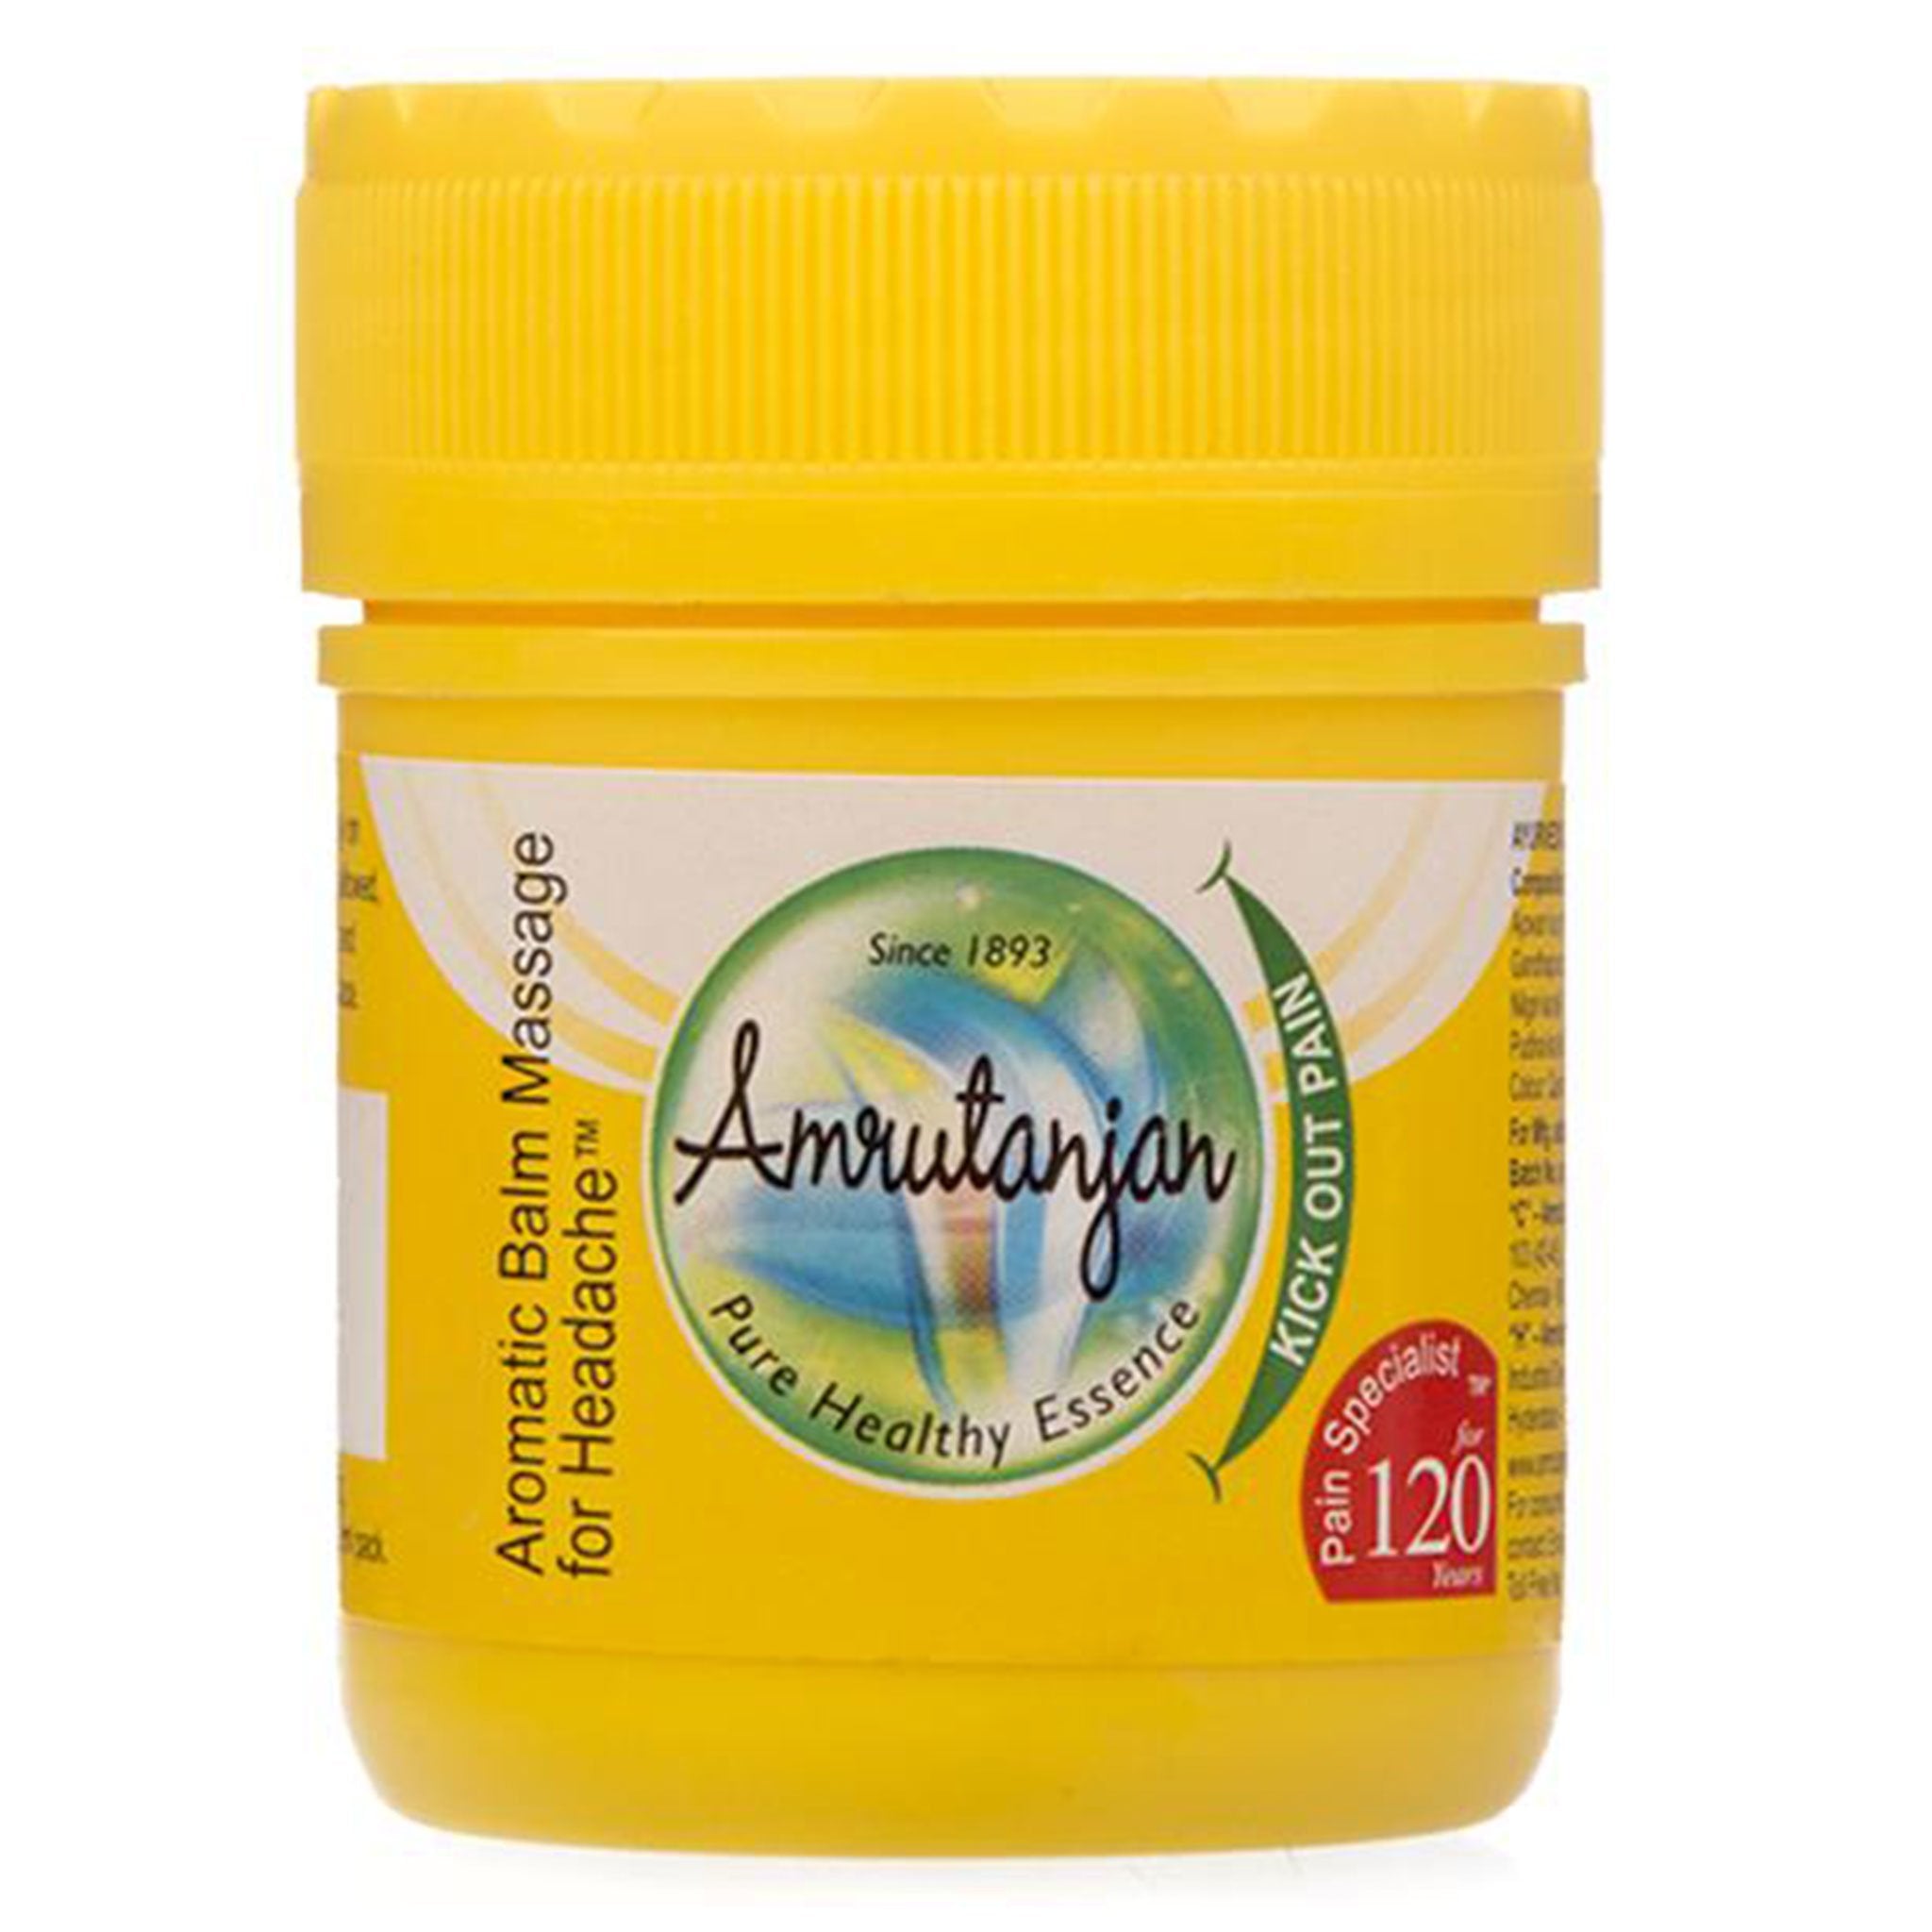 Amrutanjan Aromatic Balm yellow 30g Value Pack of 3 